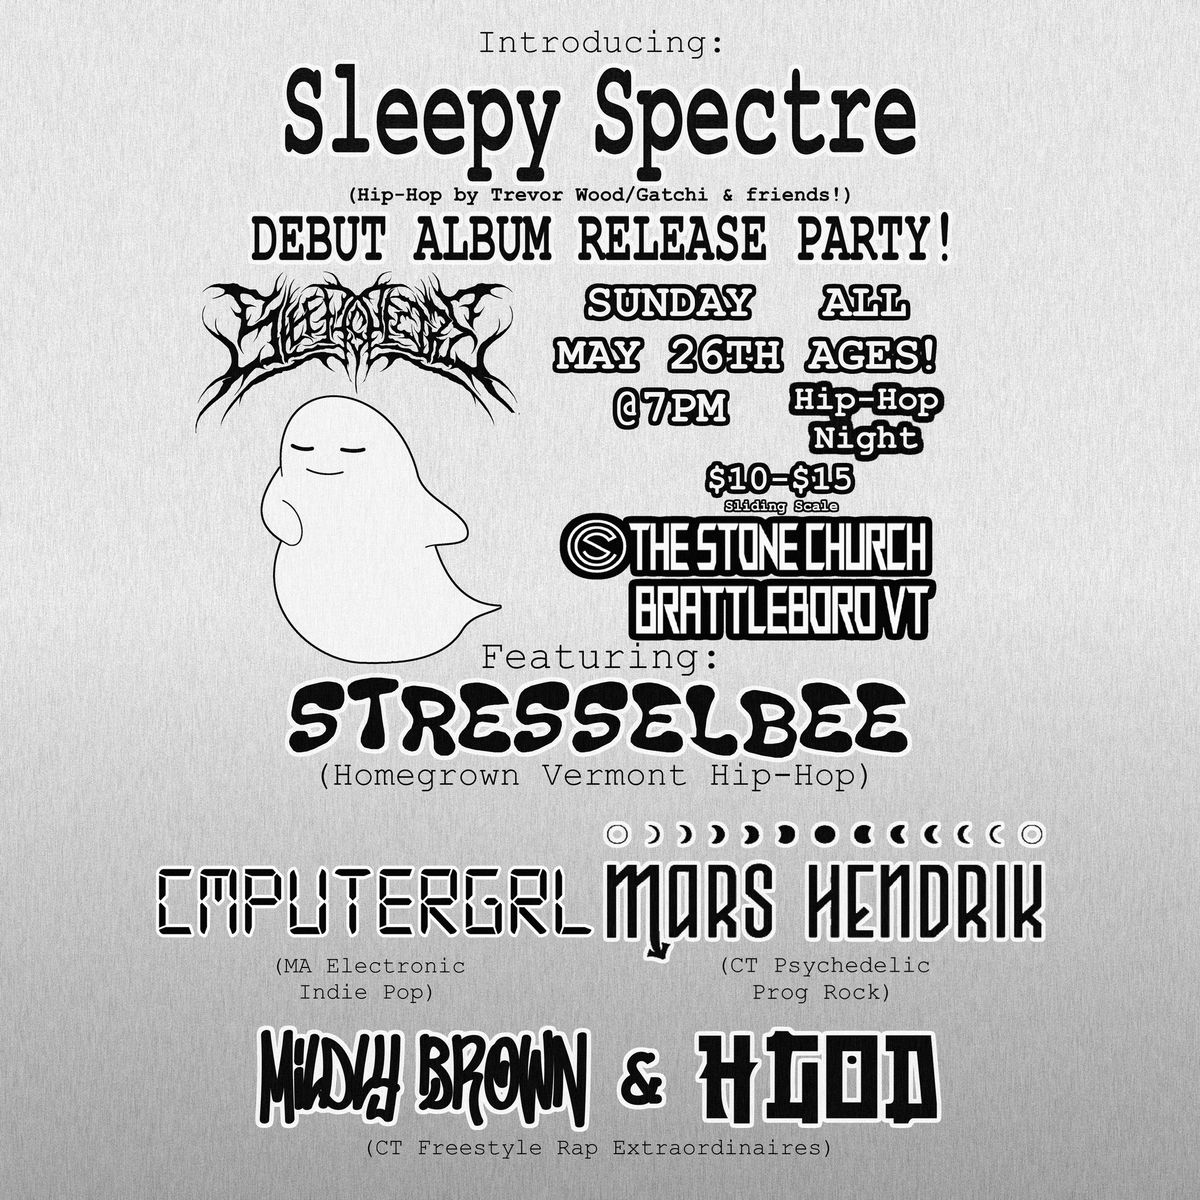 Stone Church Hip-Hop Night: Sleepy Spectre (Album release) w\/ Stresselbee, Mars Hendrik, and more!